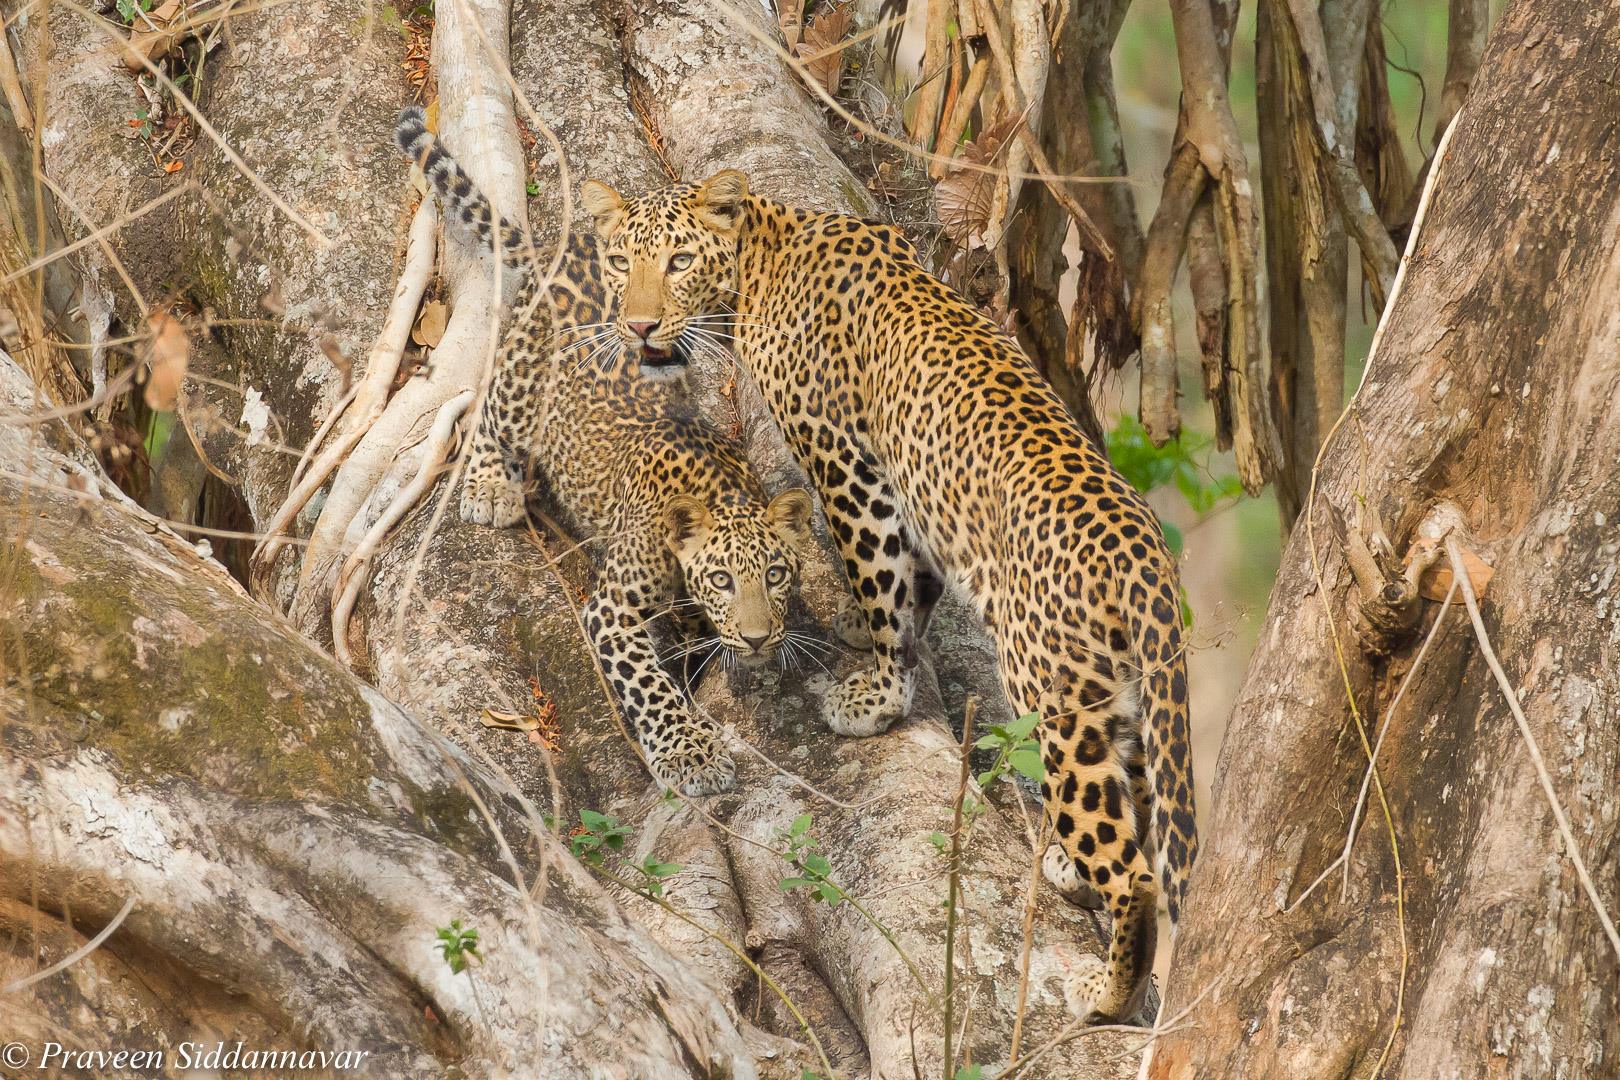 Leopard with a cub from Kabini, Karnataka captured by Praveen Siddannavar